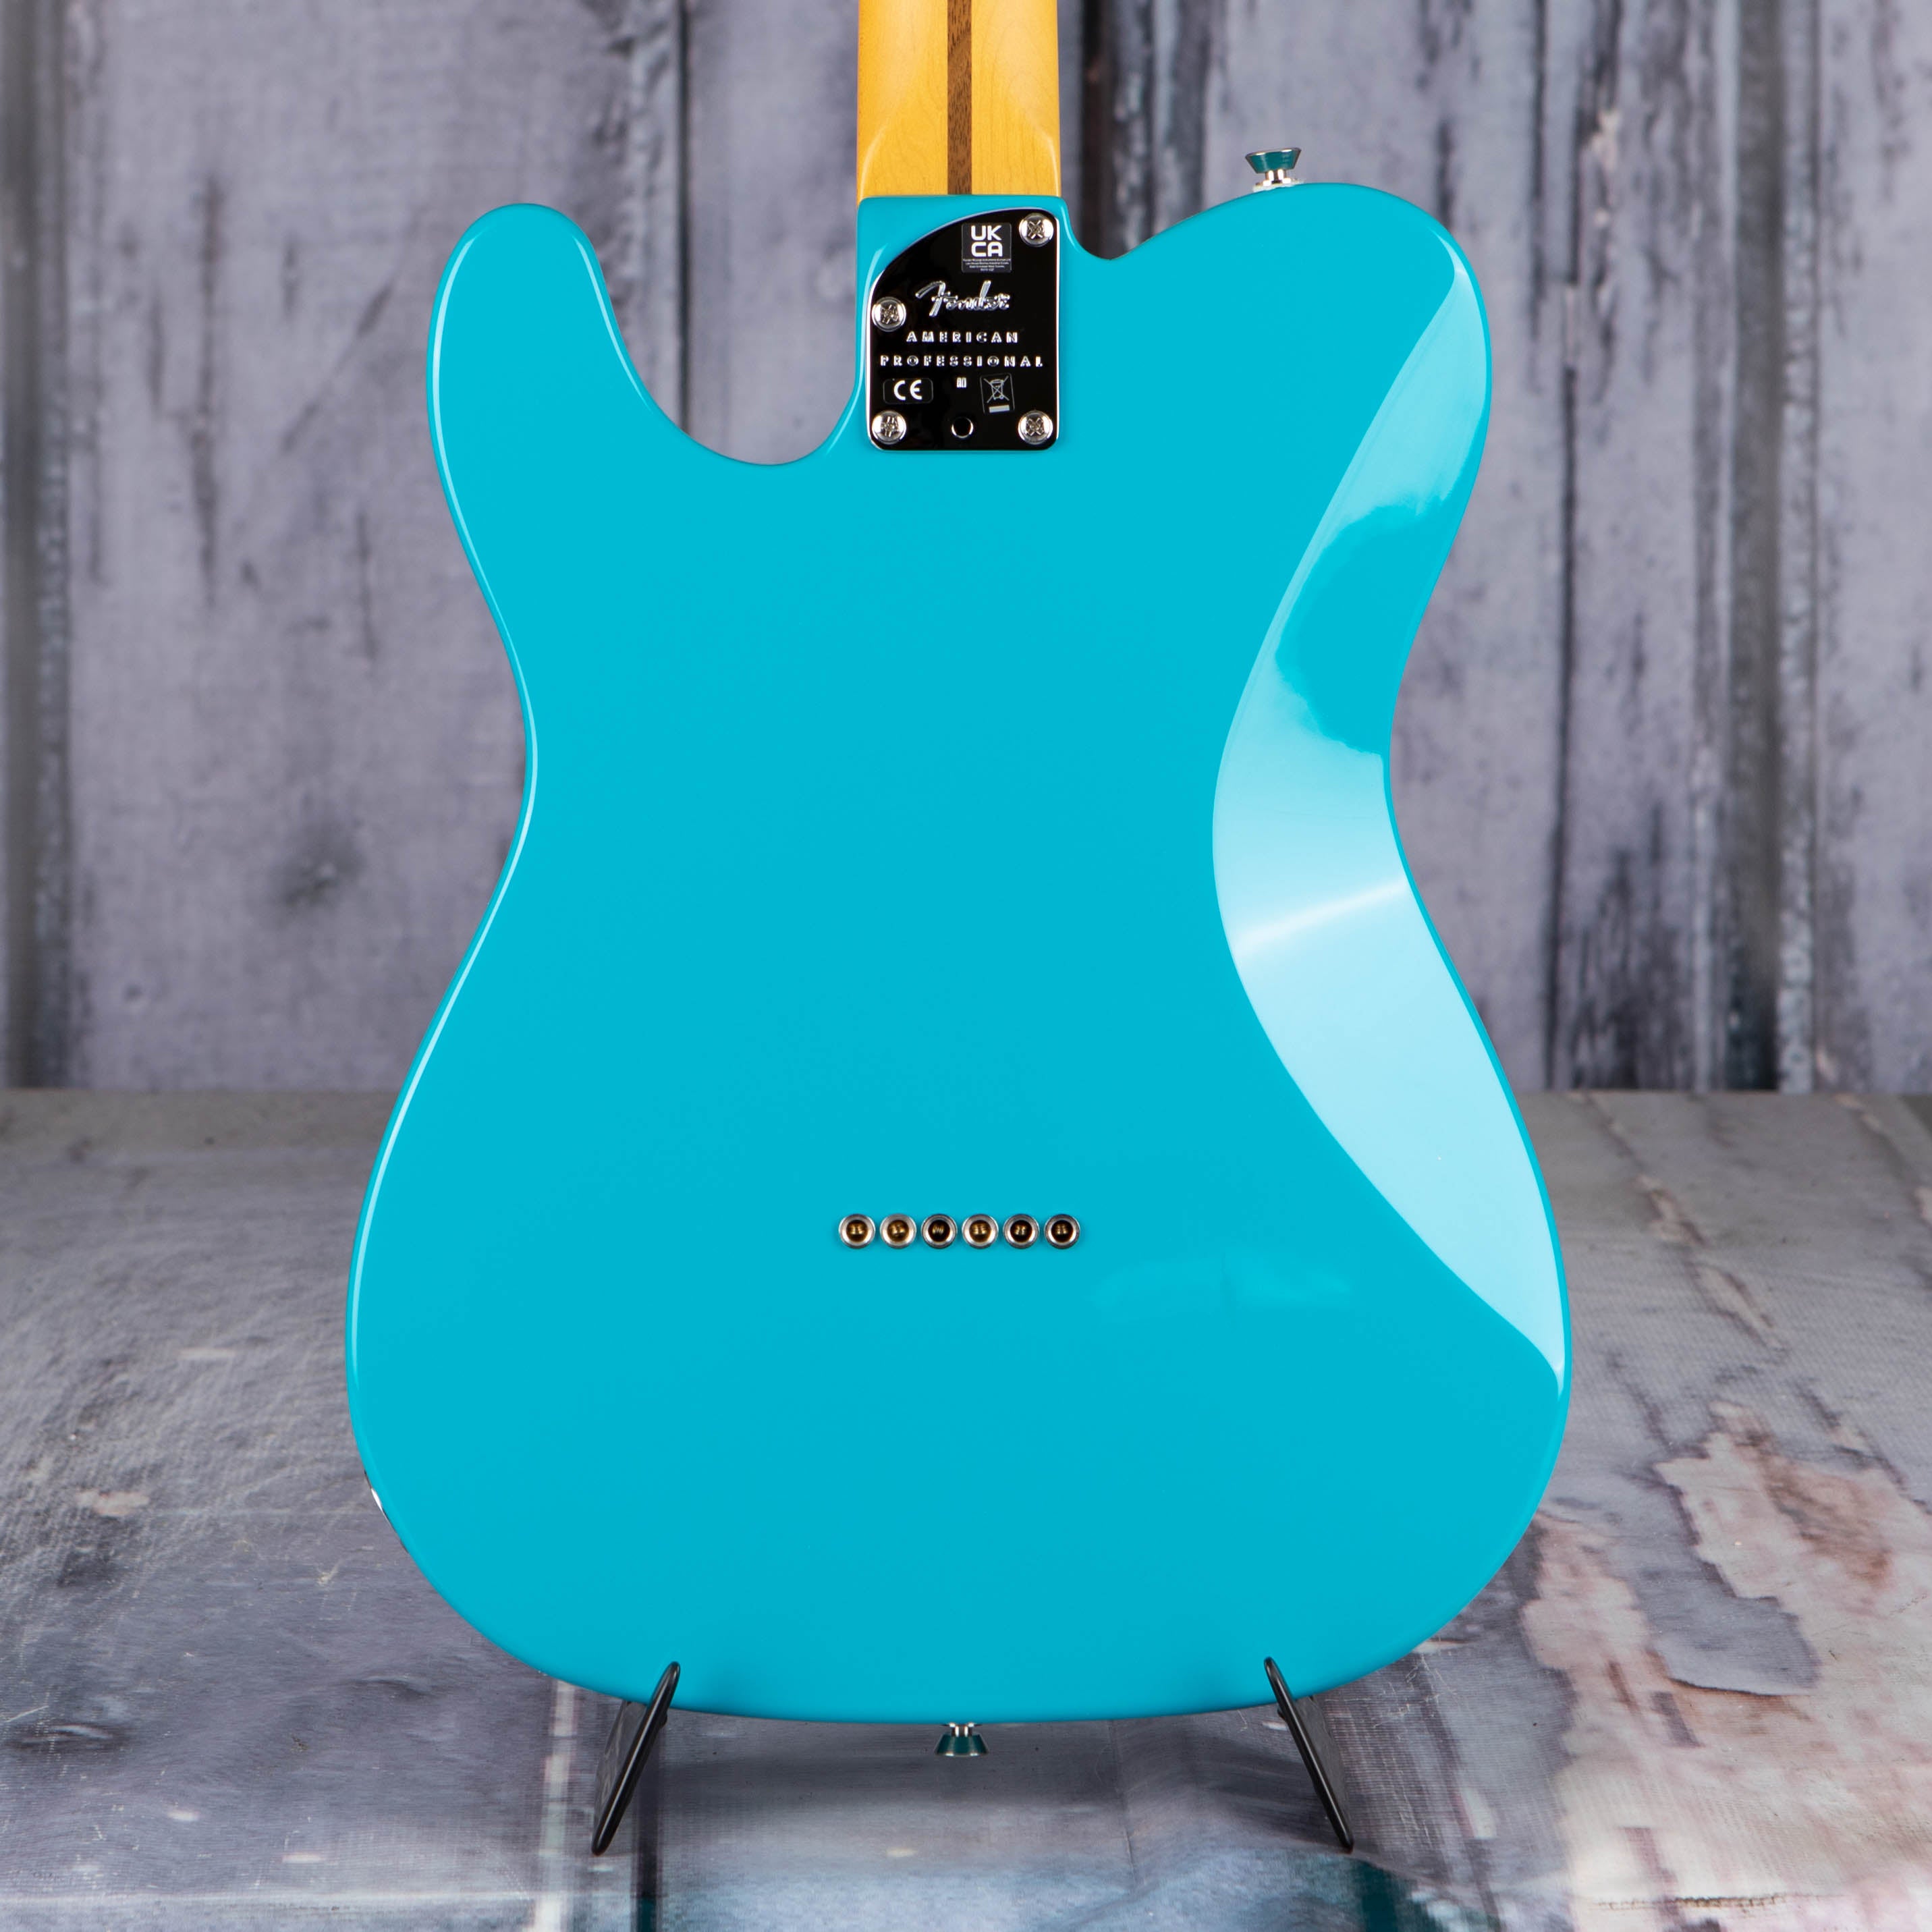 Fender American Professional II Telecaster Deluxe Electric Guitar, Miami Blue, back closeup